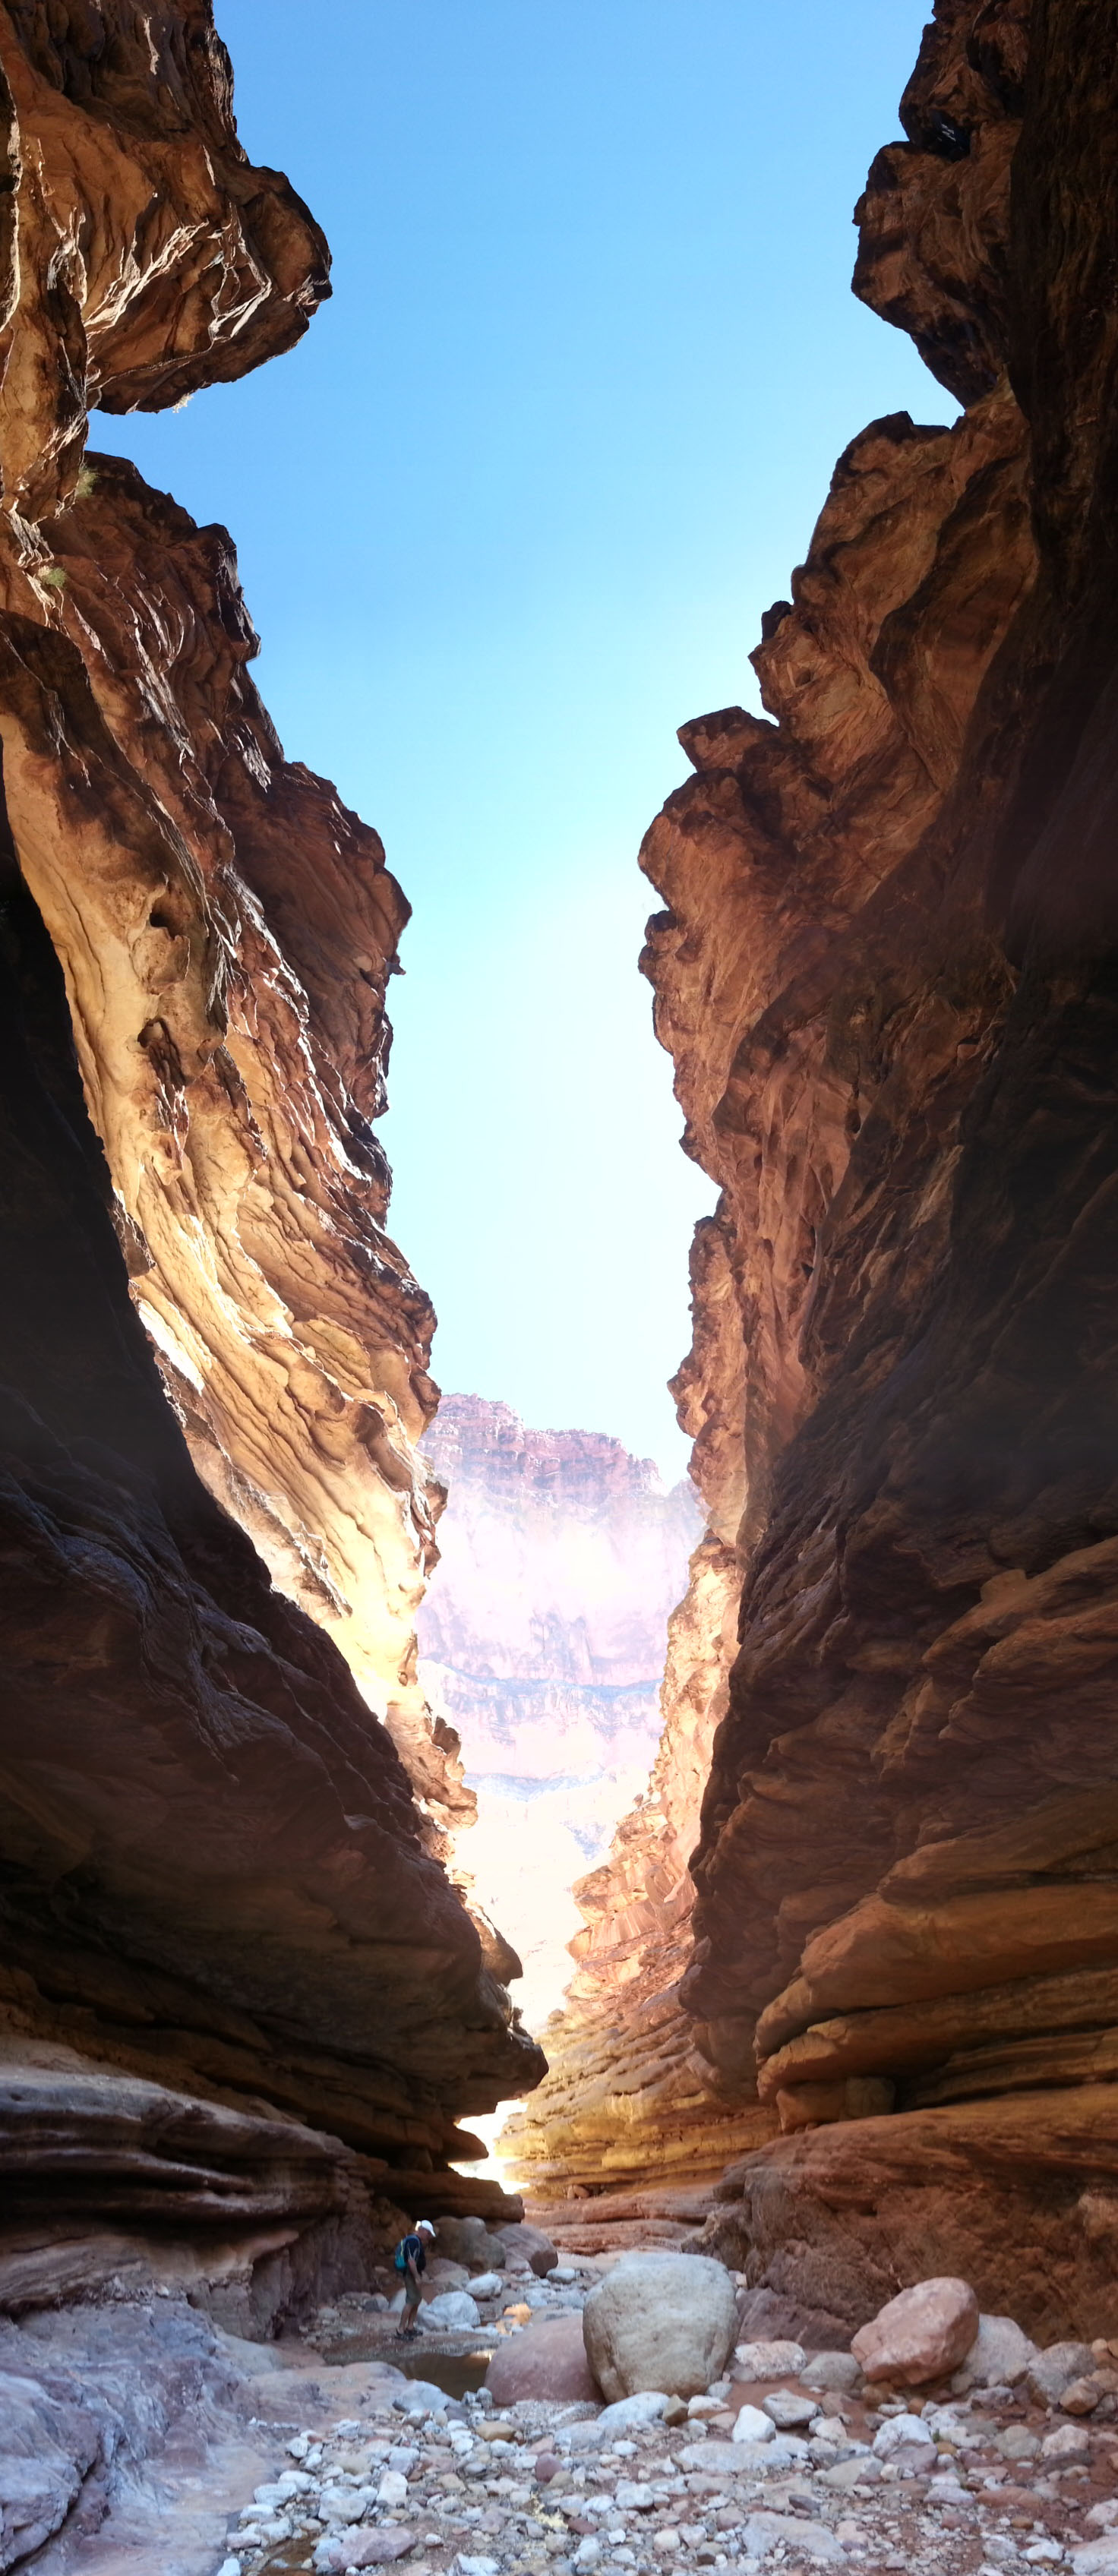 Chad Crotty - Blacktail Canyon1, AZ 7-24-2015